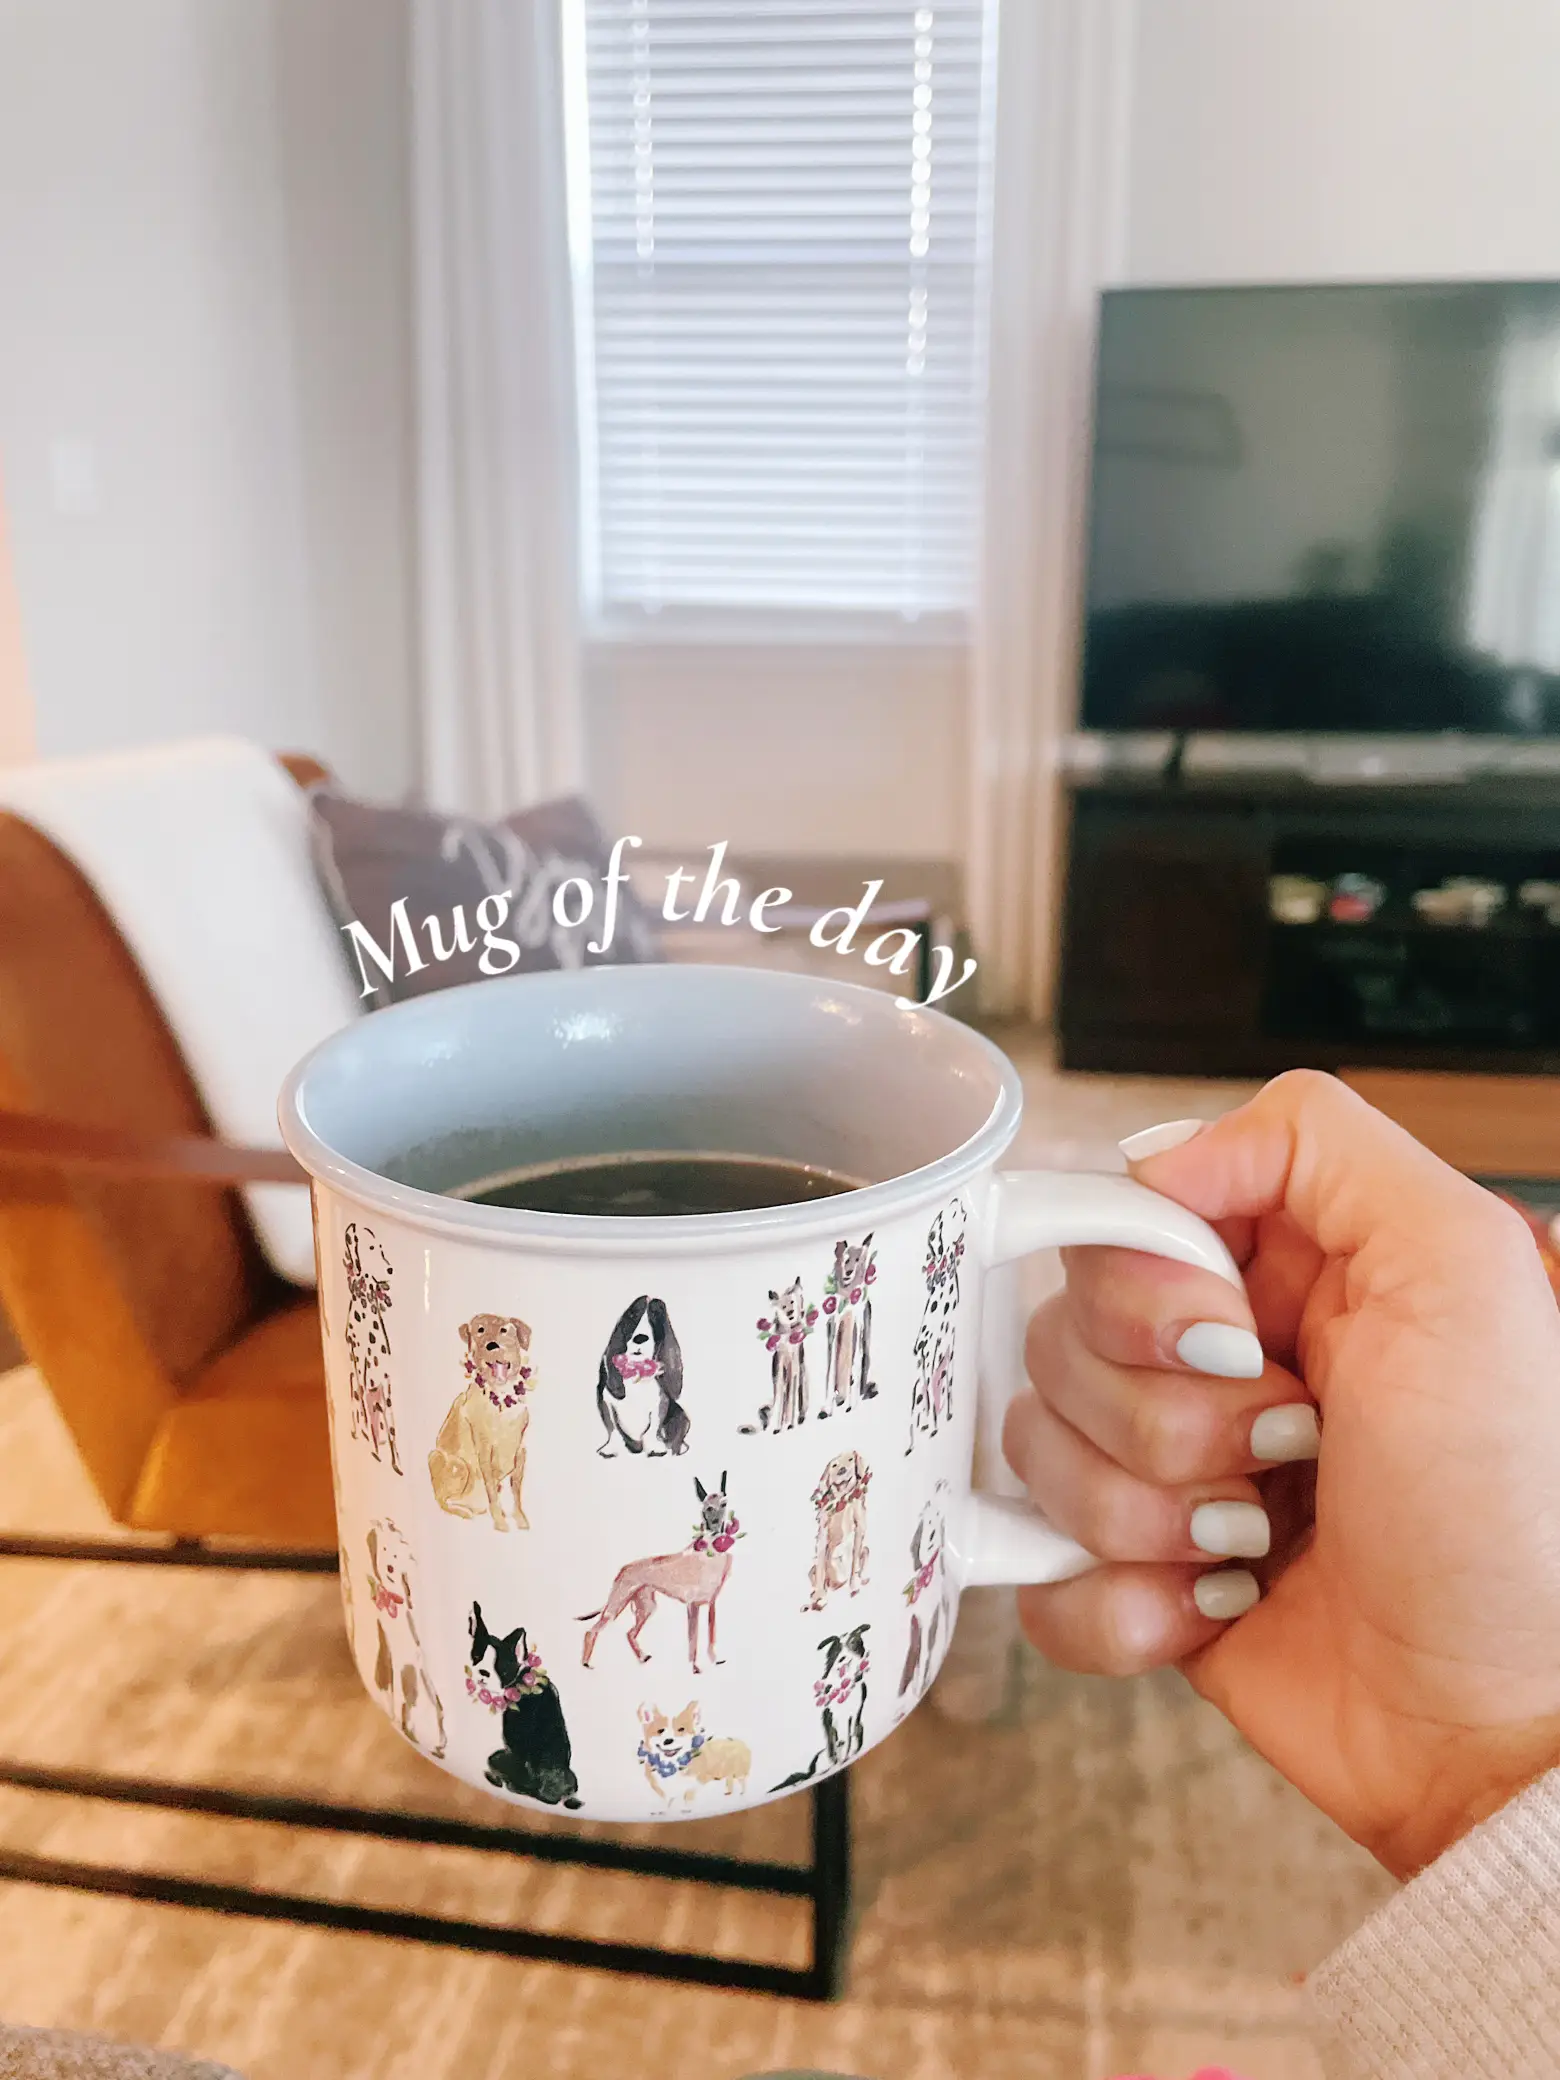 Rae Dunn Super Mom & Dad mug coffee ☕️ cup Set!